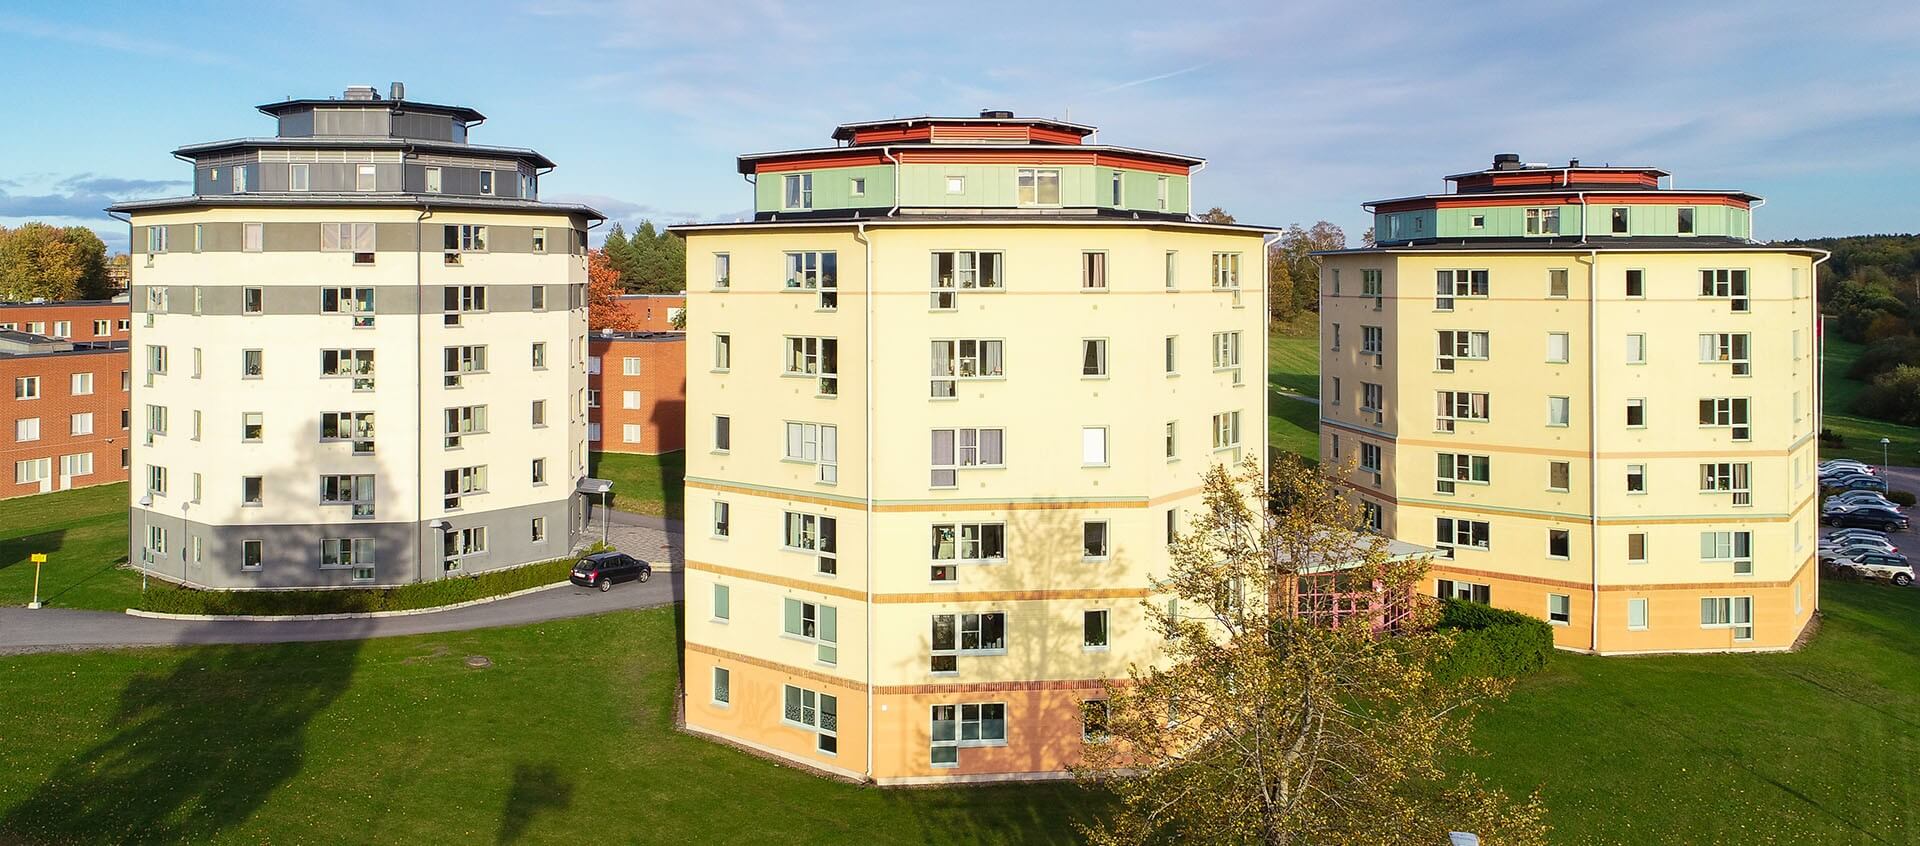 Husherren studentbostäder Örebro